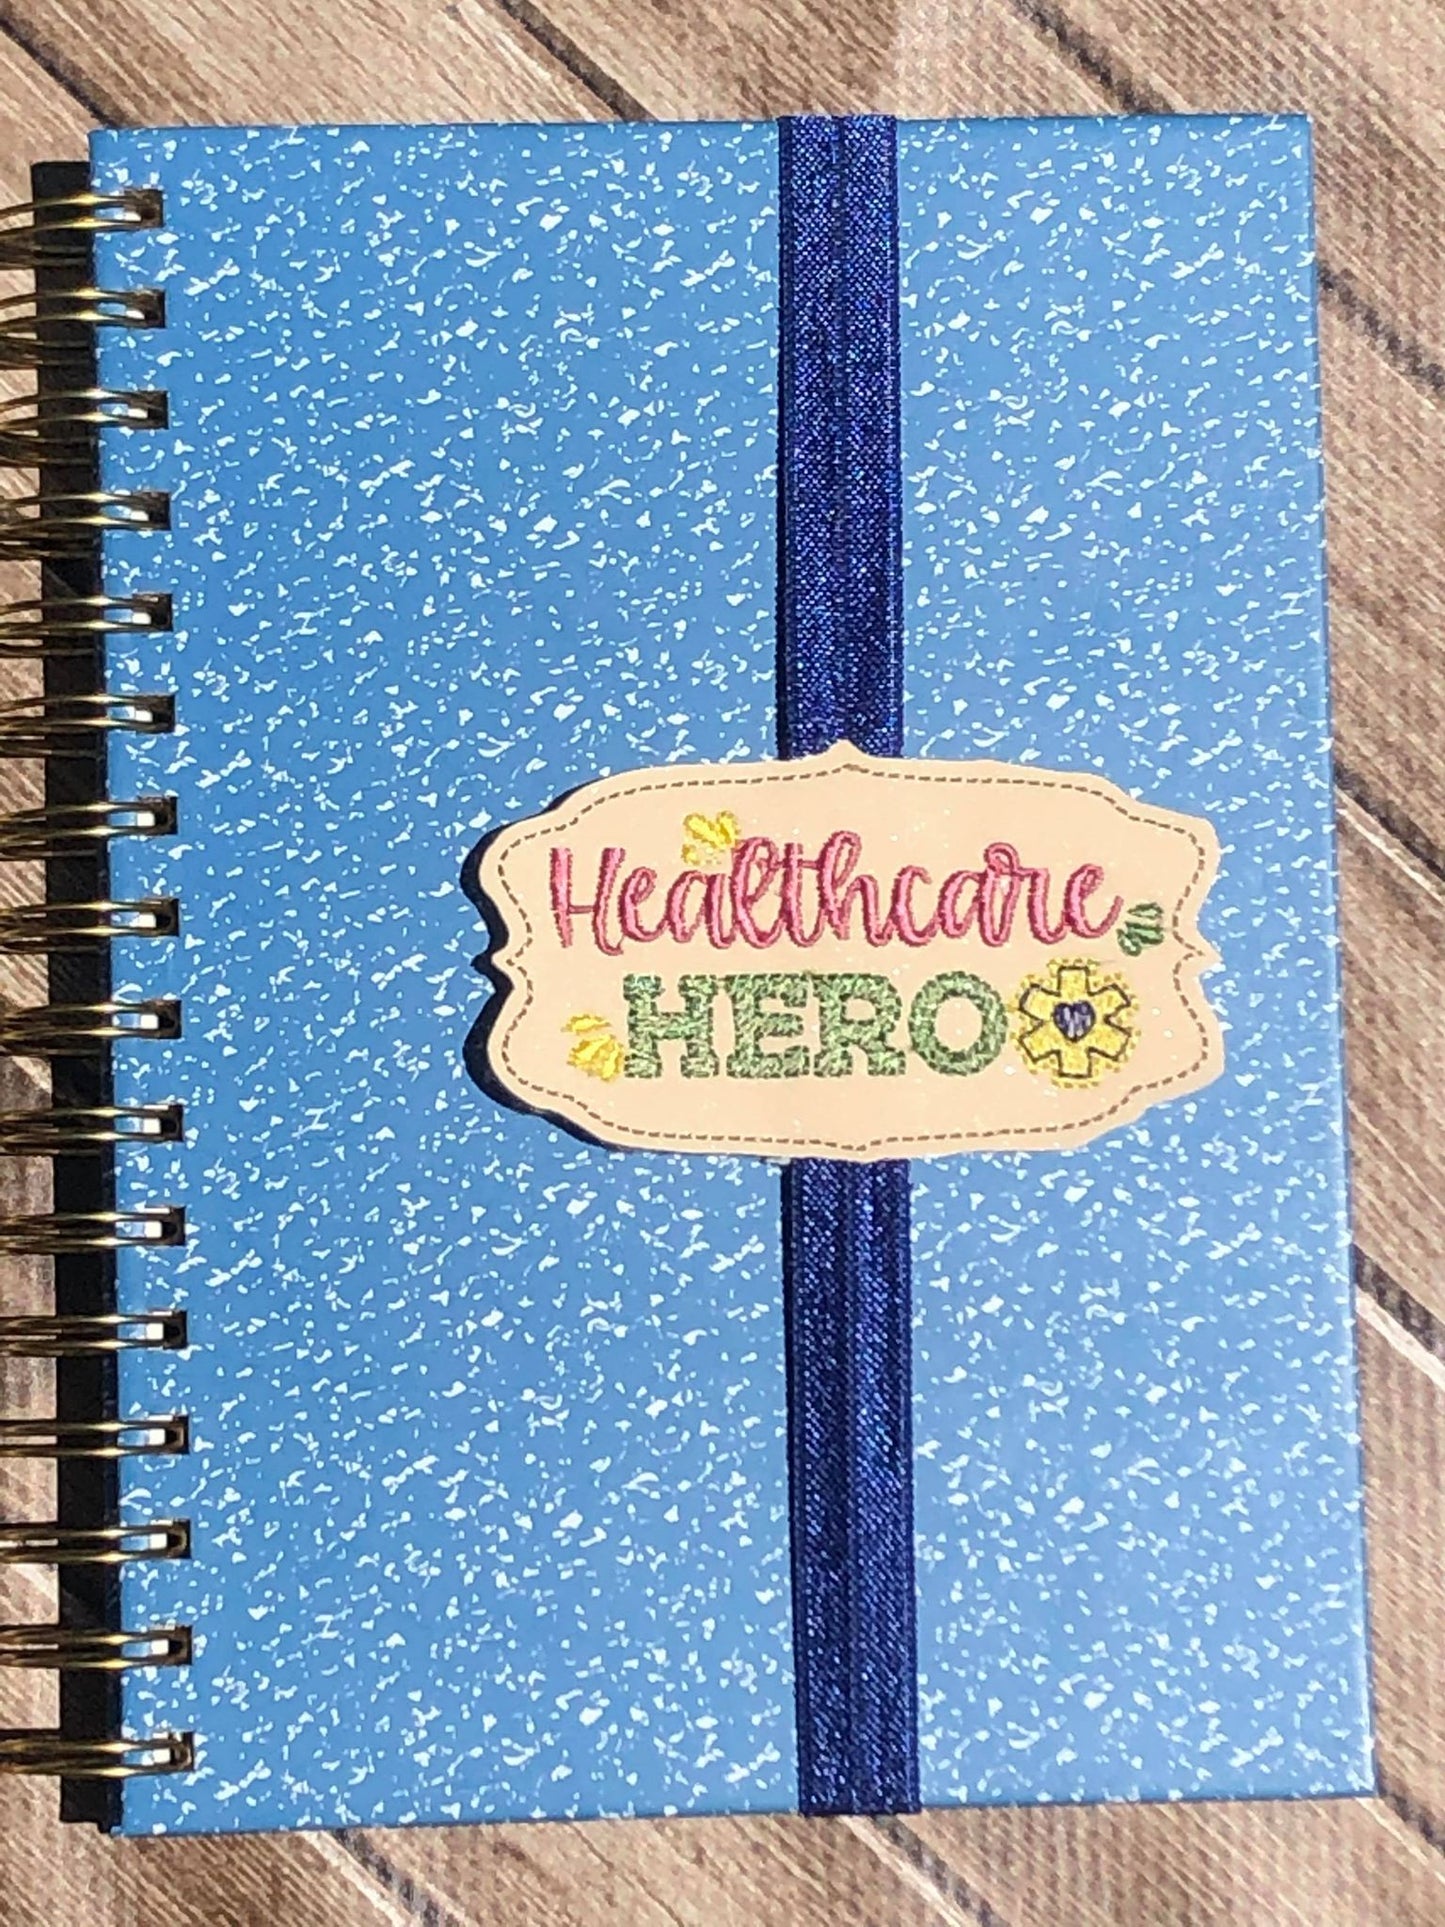 Healthcare Hero Book Band - Digital Embroidery Design